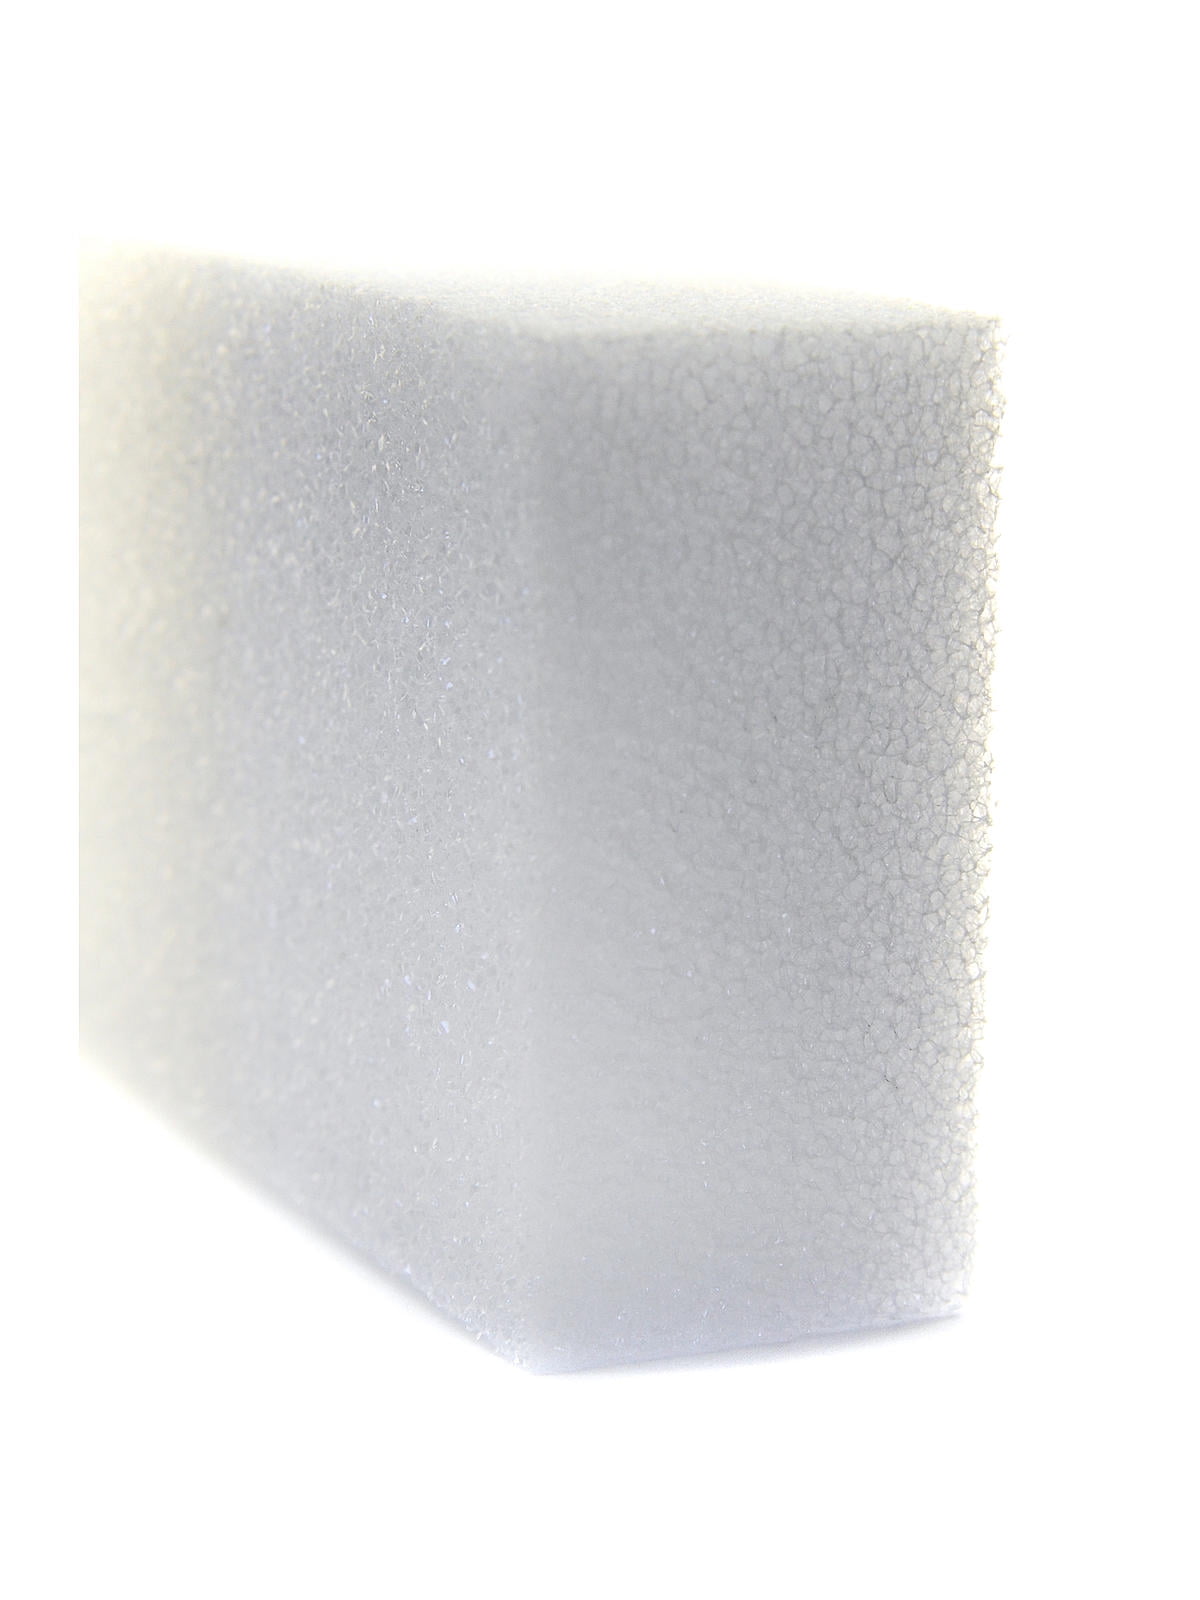 12 Pack Square Foam Blocks, Polystyrene Foam Brick for Crafts, 4 x 4 x 2  in, PACK - Kroger